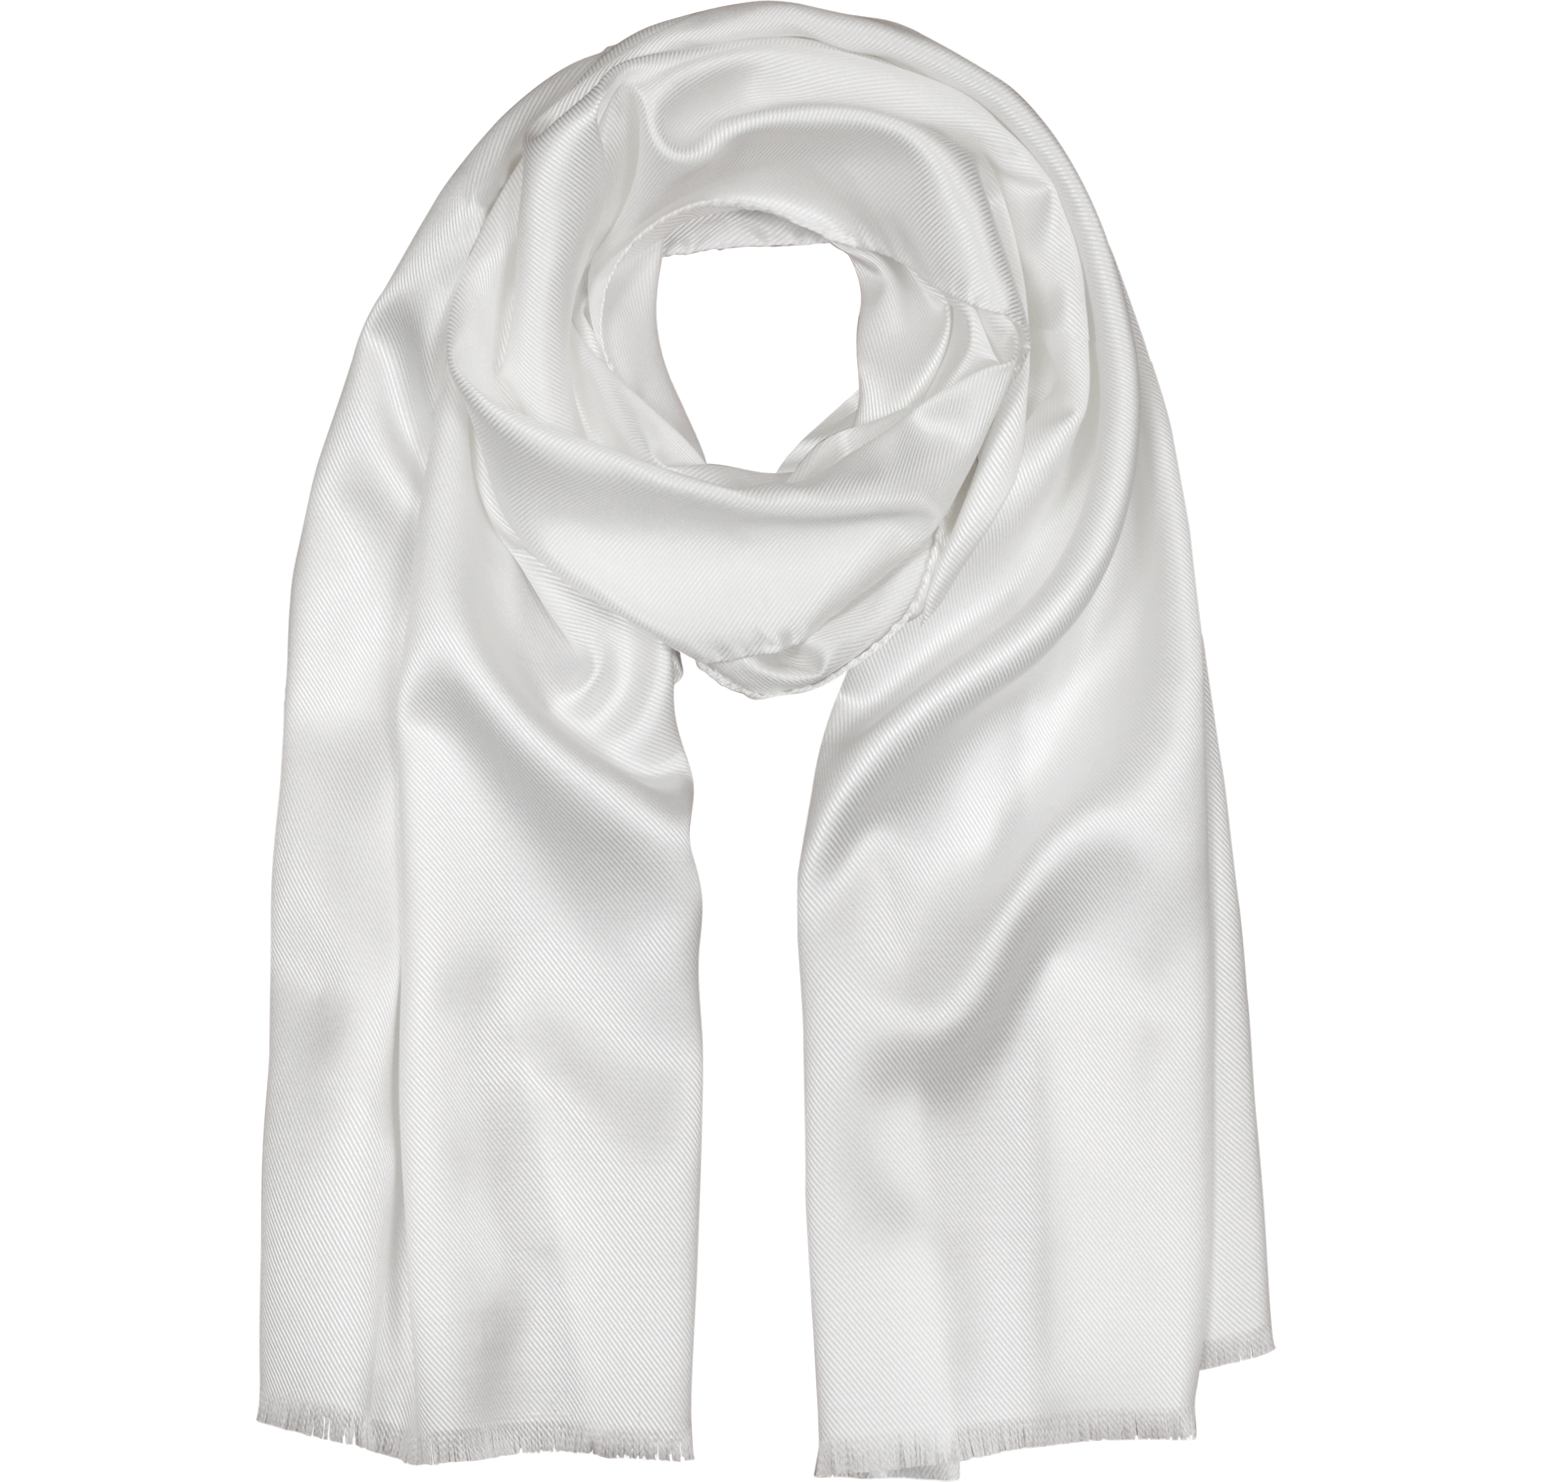 Silk satin scarf for men - white and black